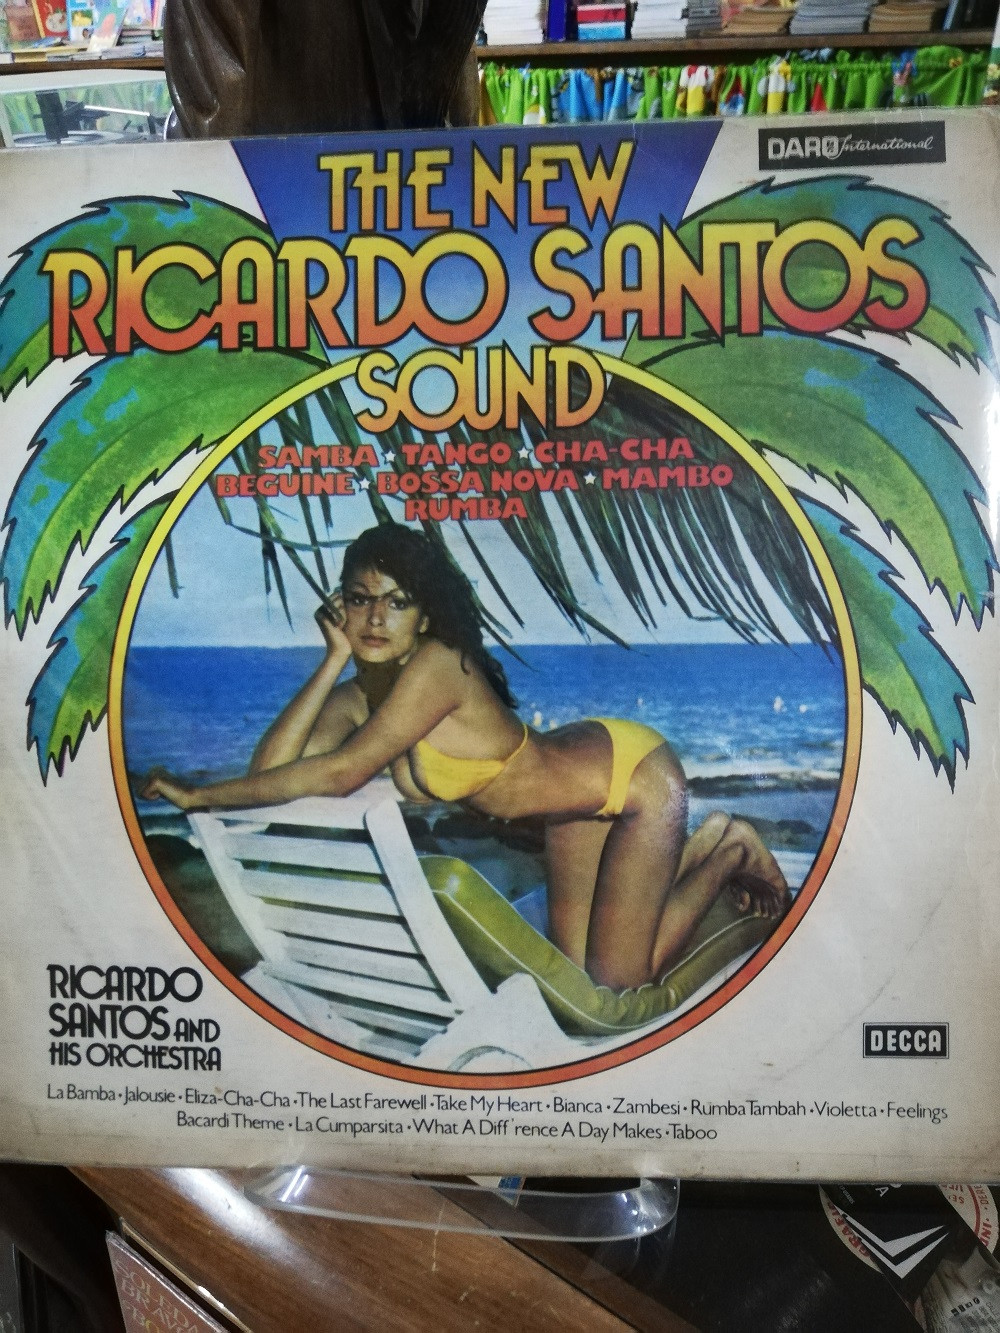 Imagen LP RICARDO SANTOS AND HIS ORCHESTRA - THE NEW RICARDO SANTOS SOUND 1